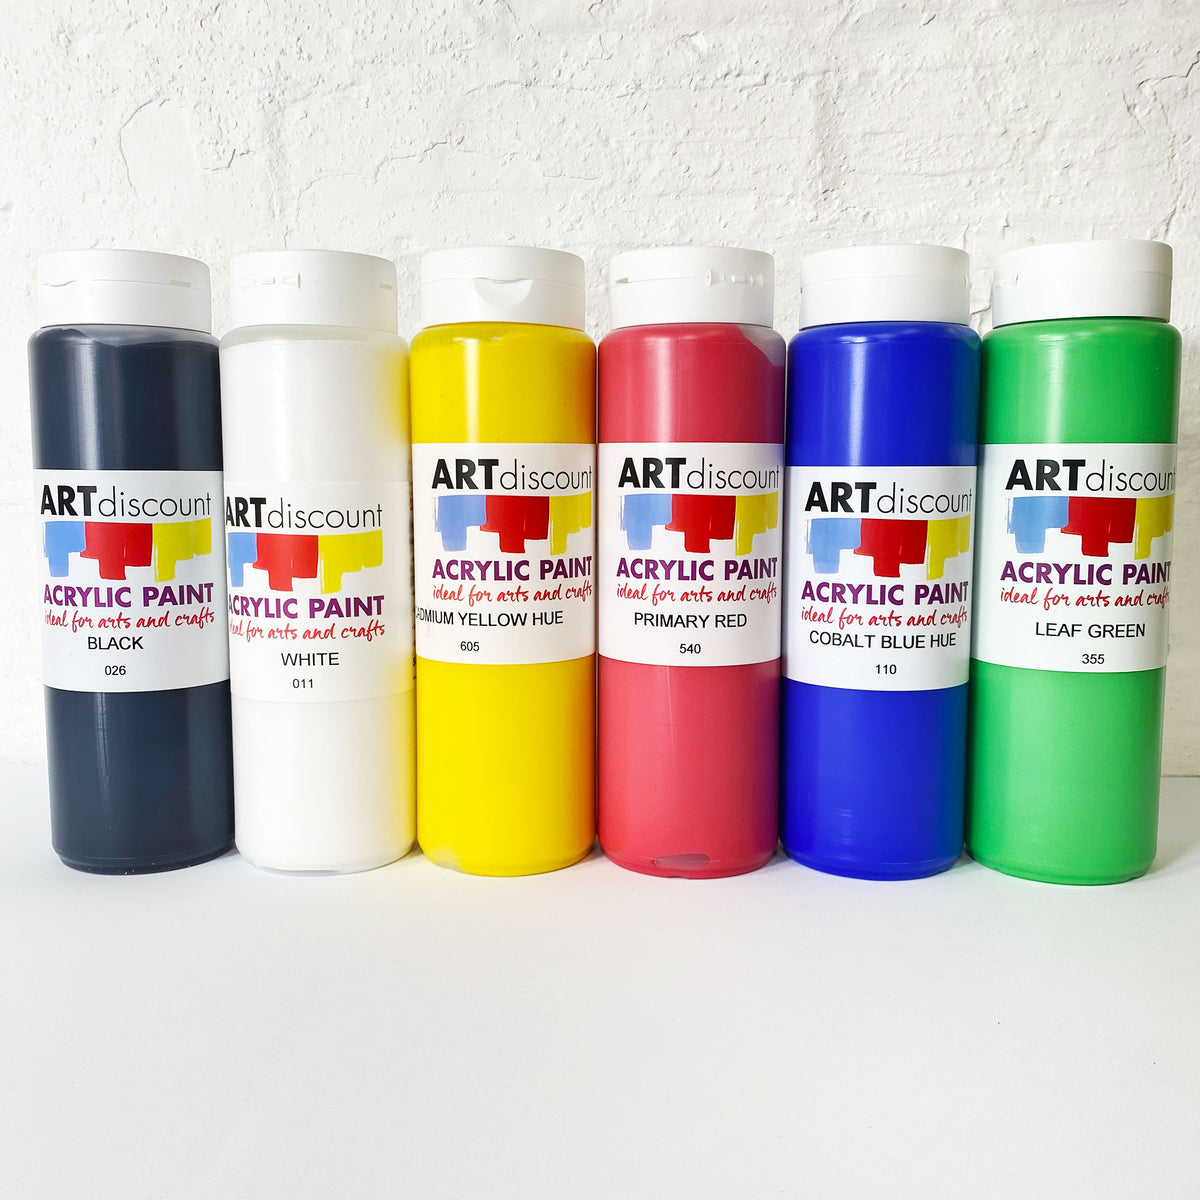 ARTDiscount Acrylic Paint Trial Pack of 6 500ml bottles.